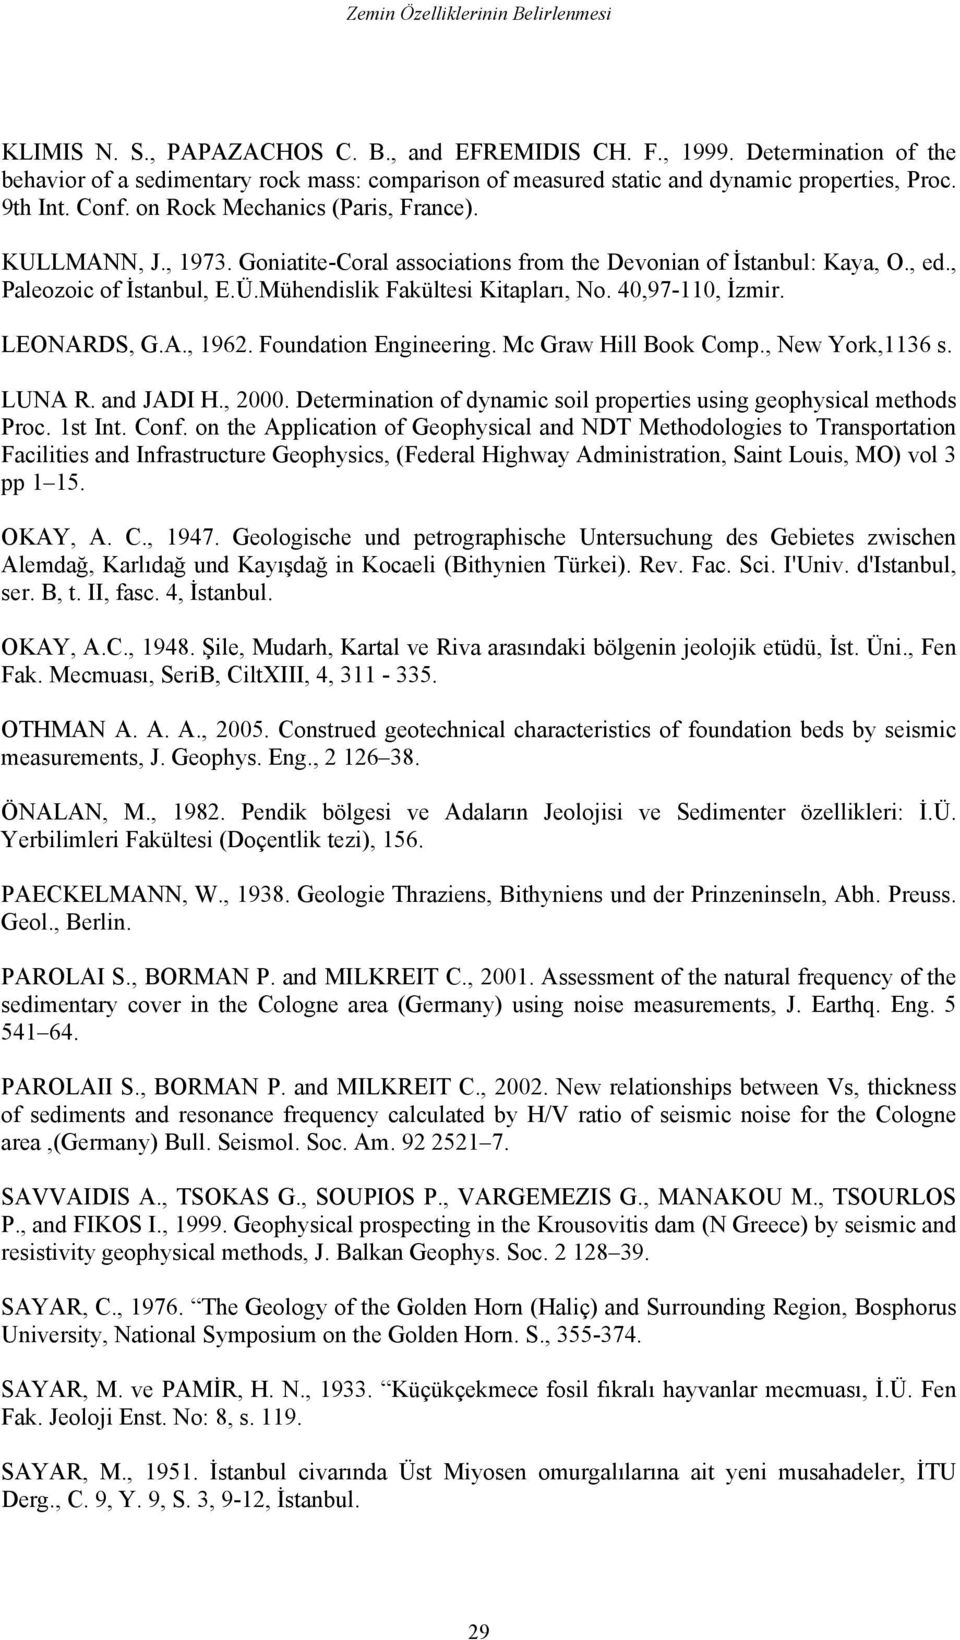 Goniatite-Coral associations from the Devonian of İstanbul: Kaya, O., ed., Paleozoic of İstanbul, E.Ü.Mühendislik Fakültesi Kitapları, No. 40,97-110, İzmir. LEONARDS, G.A., 1962.